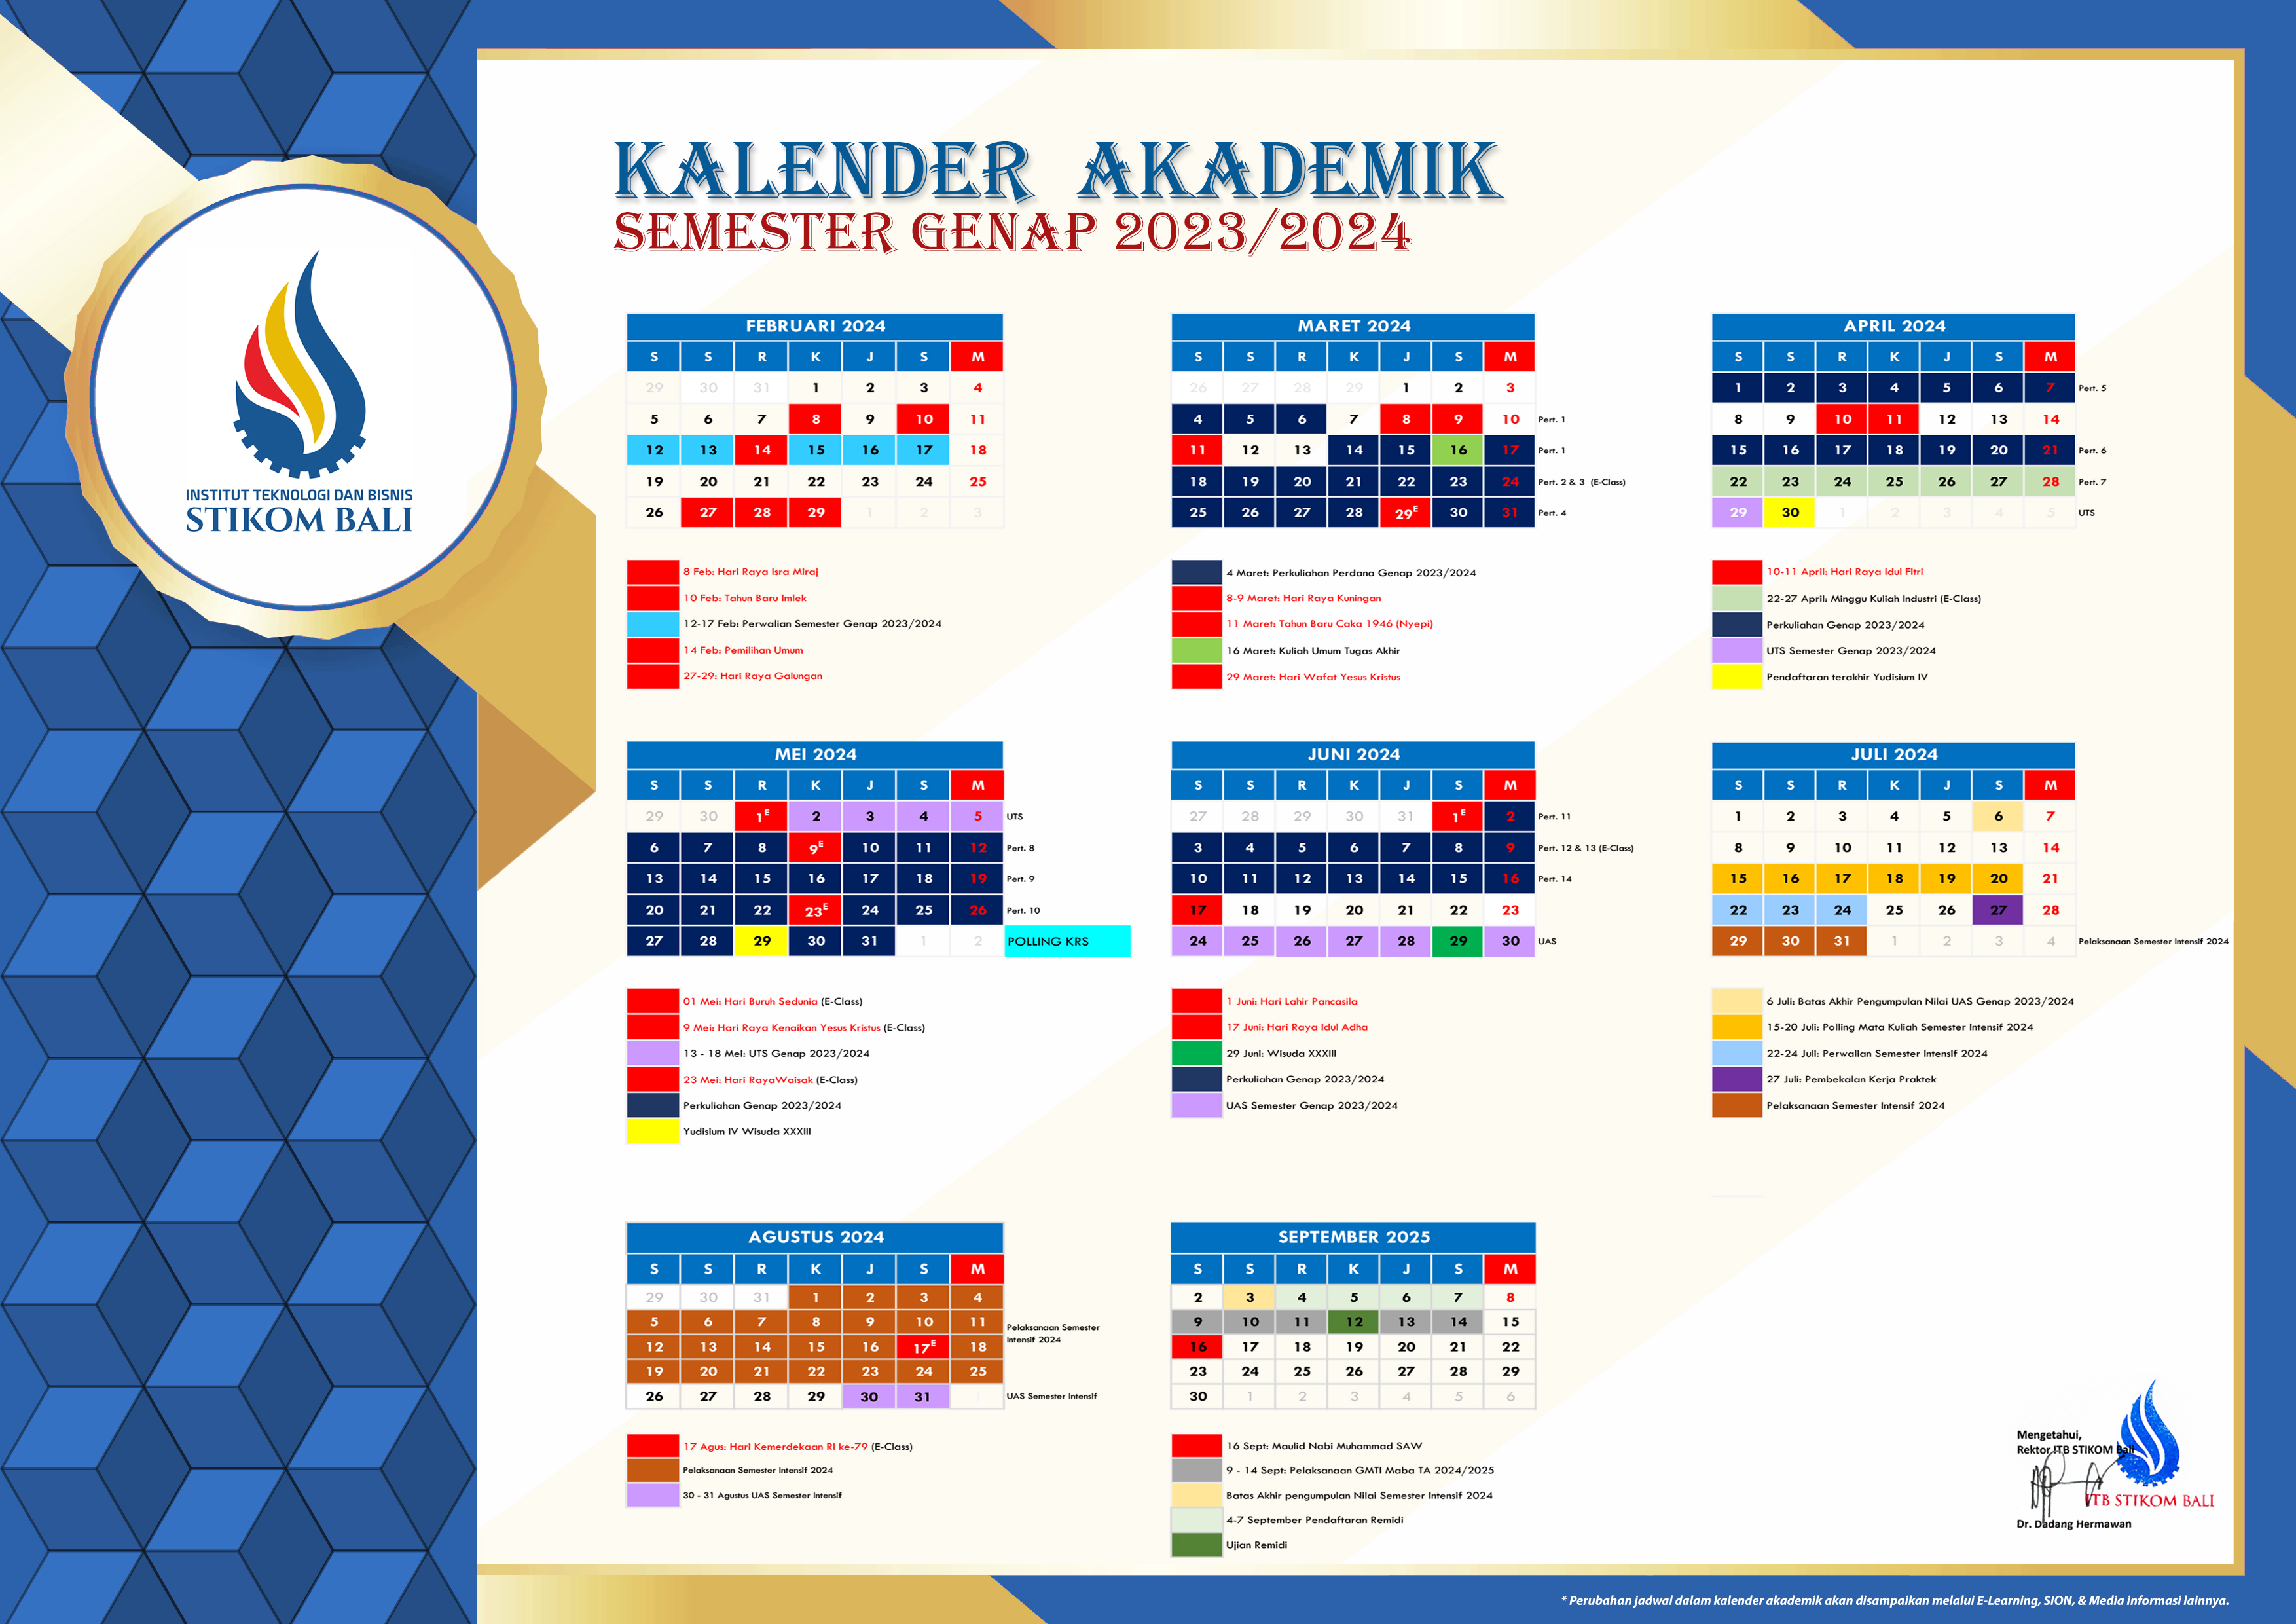 Kalender Akademik Semester Genap 2023-2024.jpg